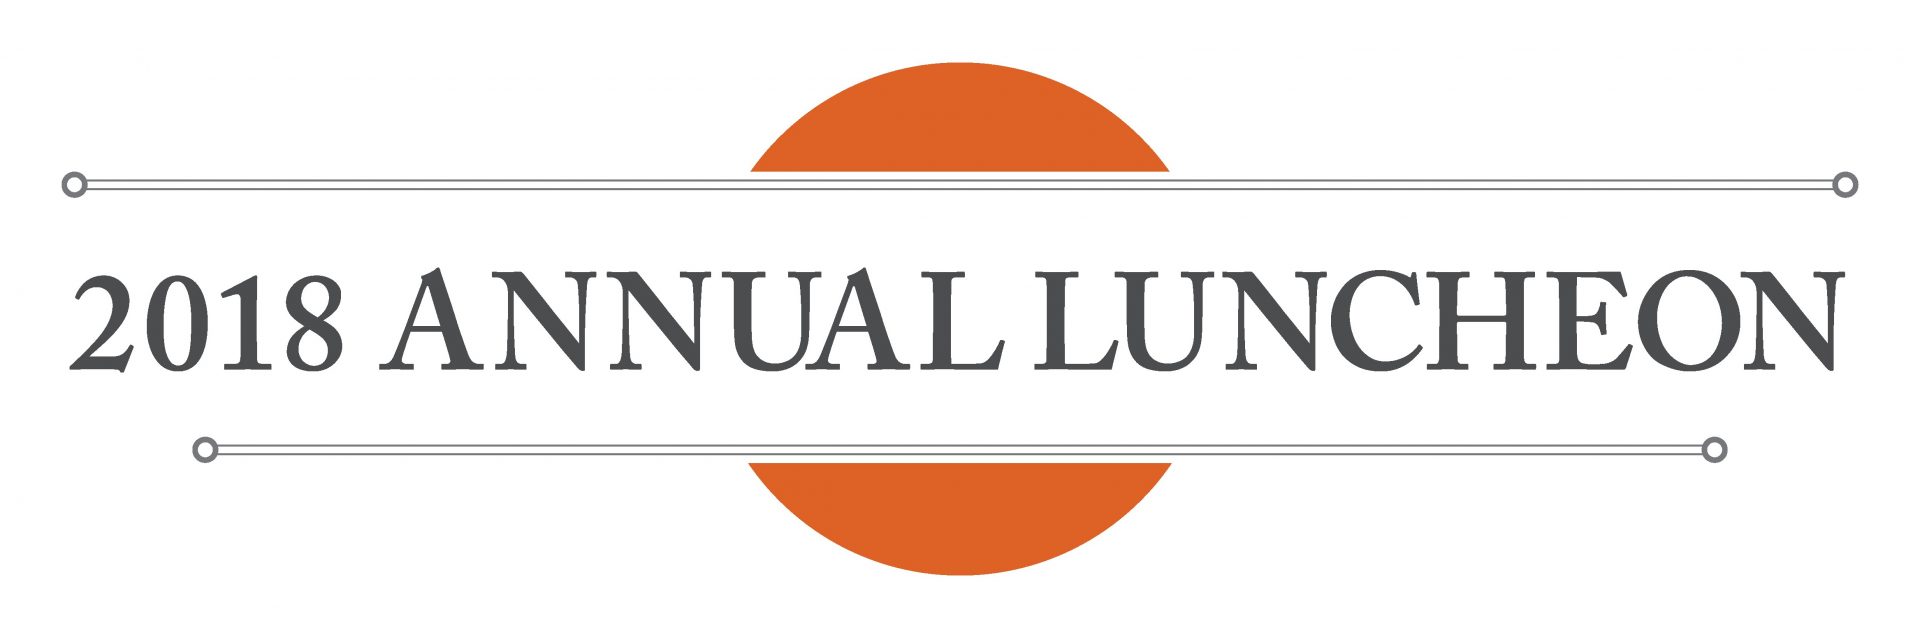 2018 Annual Luncheon